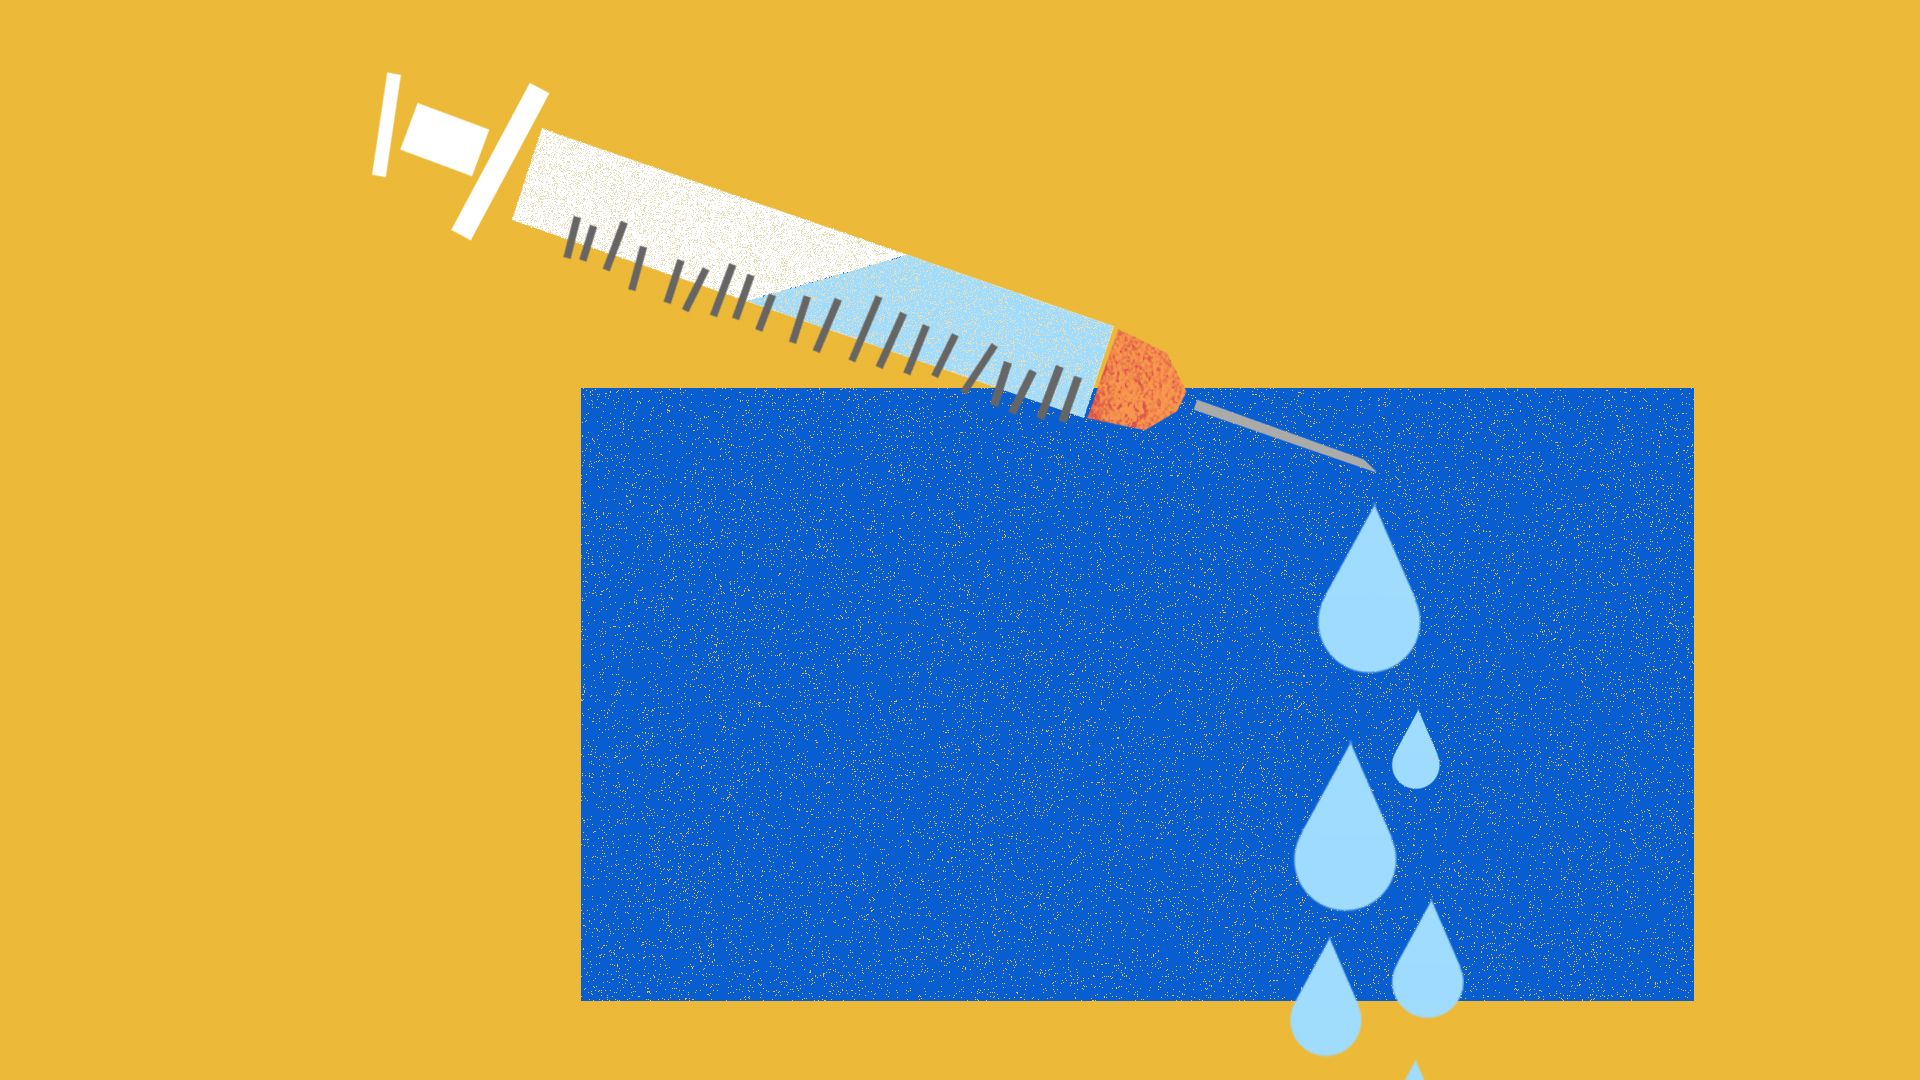 Illustration of syringe with tears